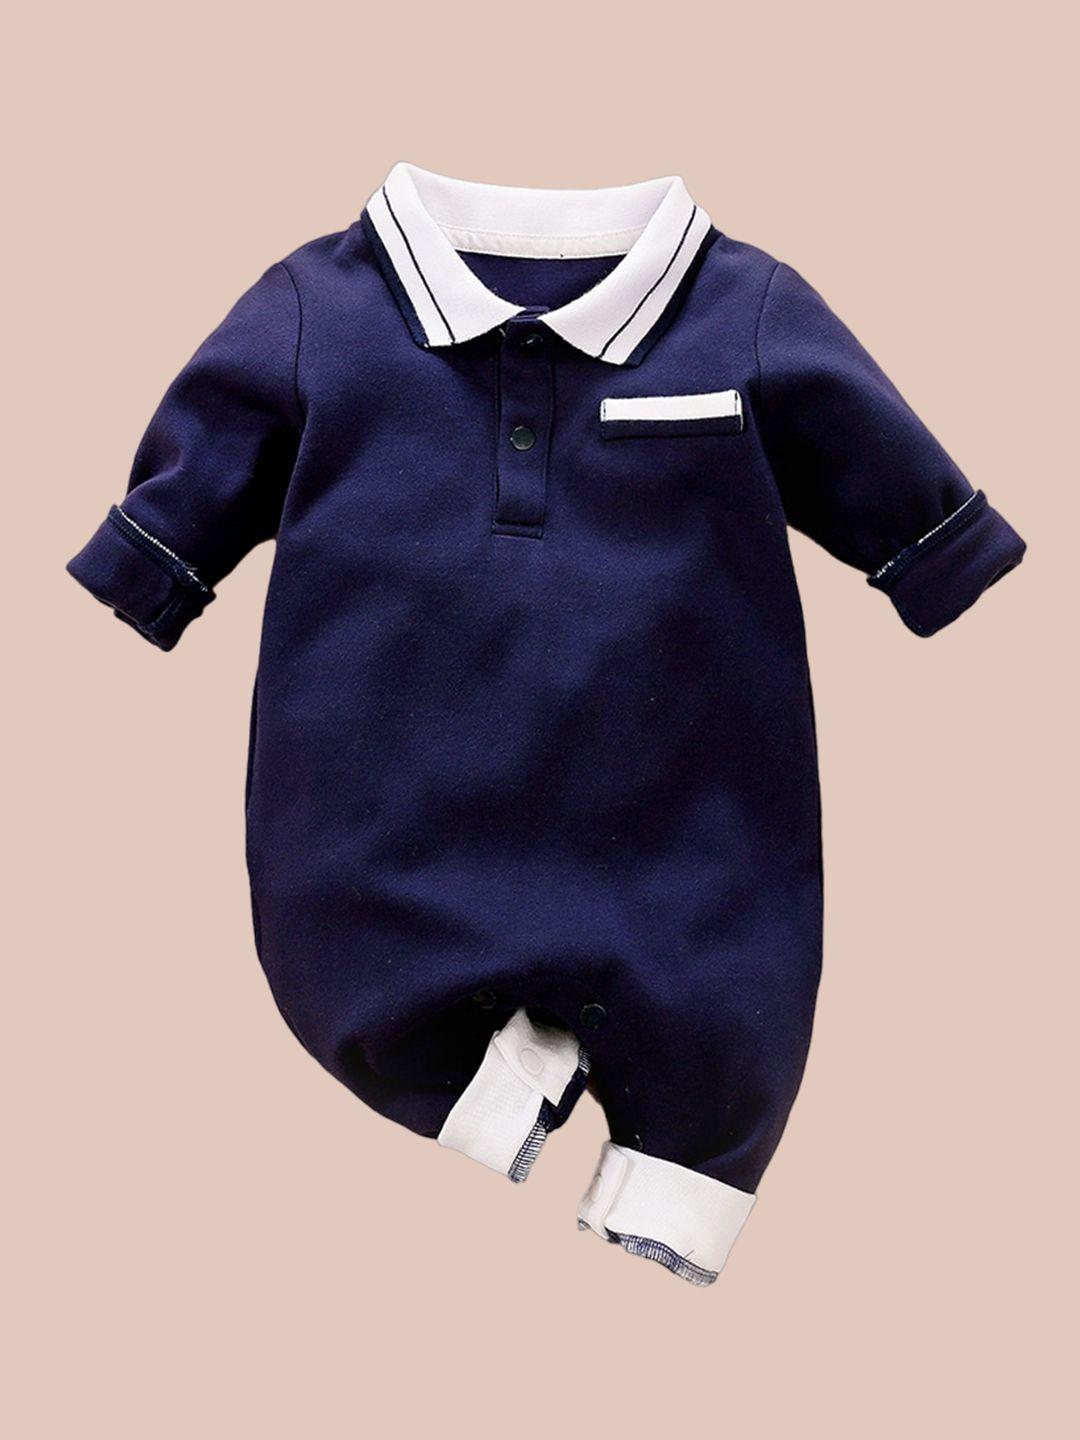 stylecast blue infant boys shirt collar cotton rompers